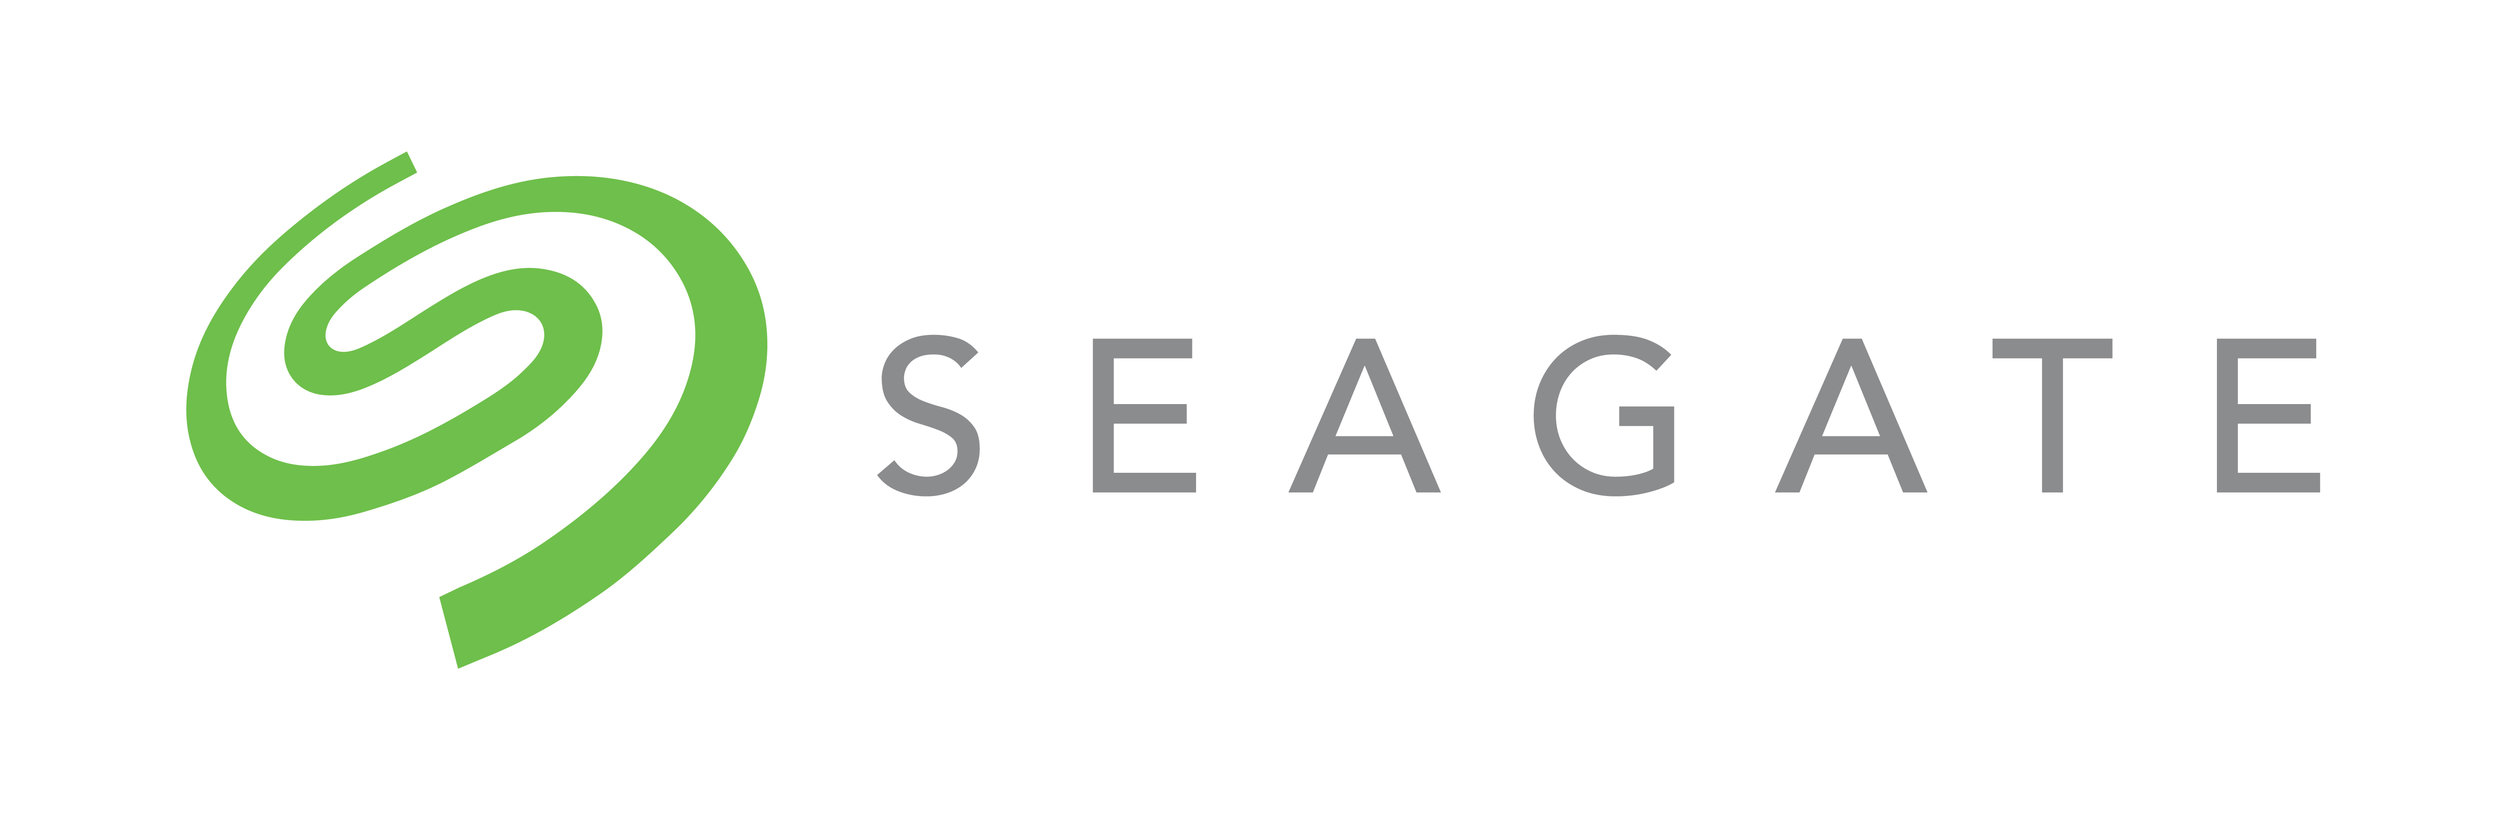 seagate-green-horizontal.jpg